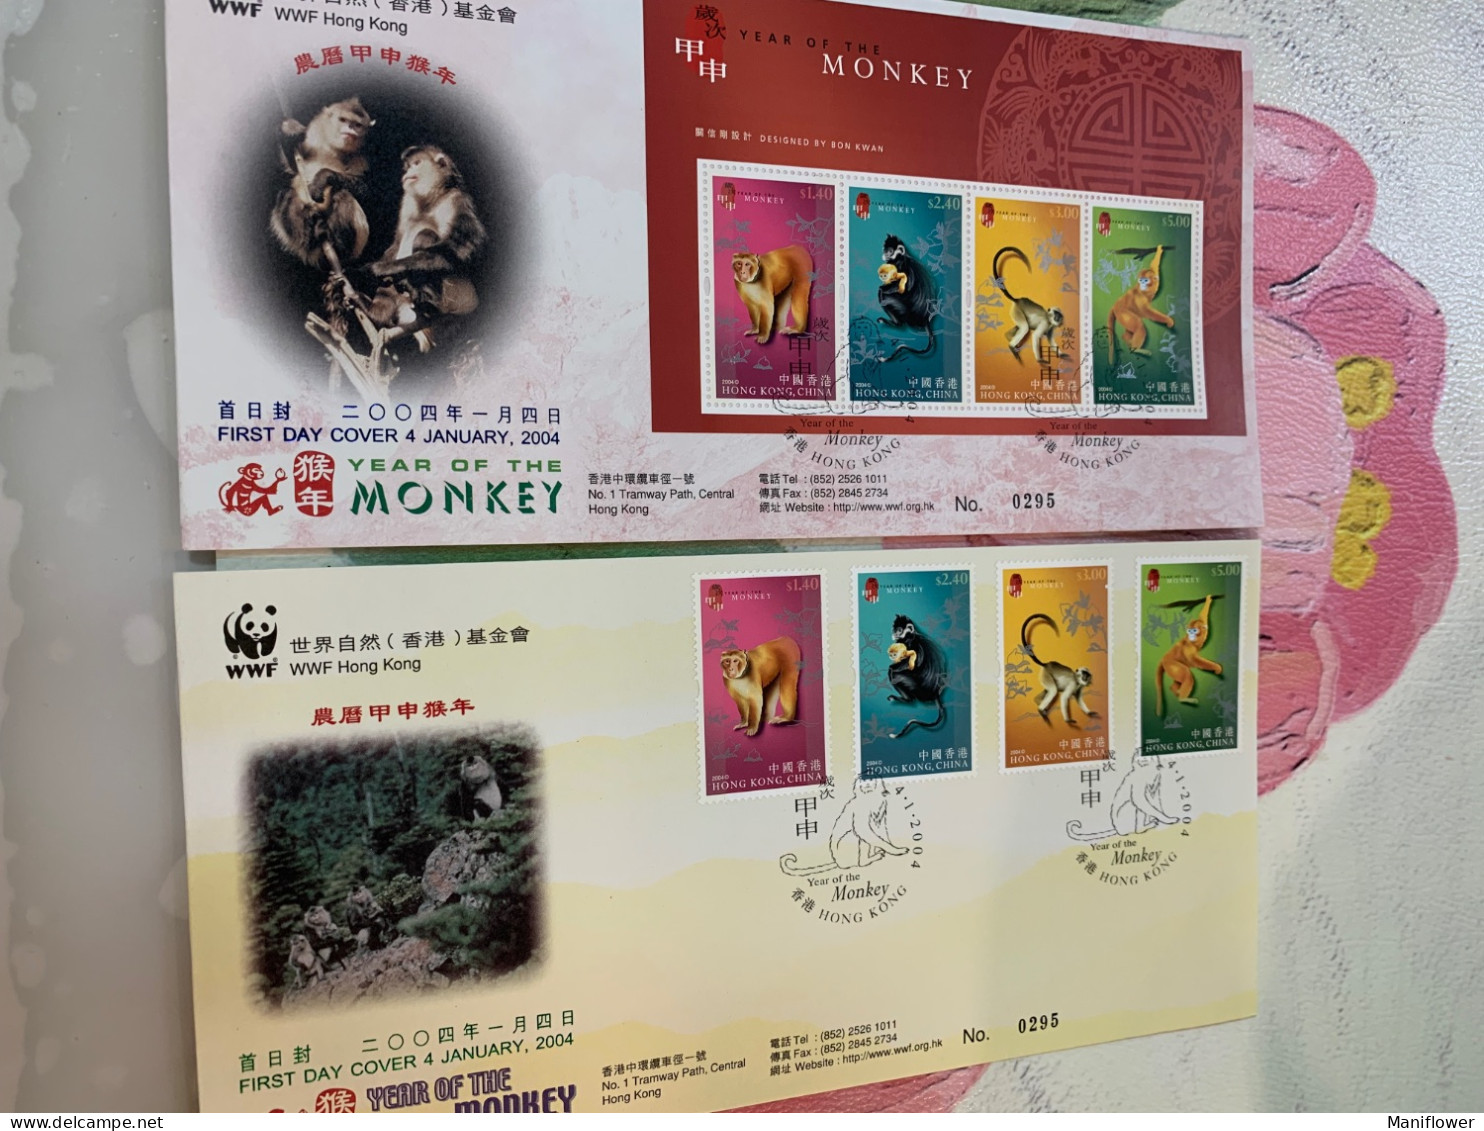 Hong Kong Stamp 2004 New Year Monkey FDC WWF - New Year